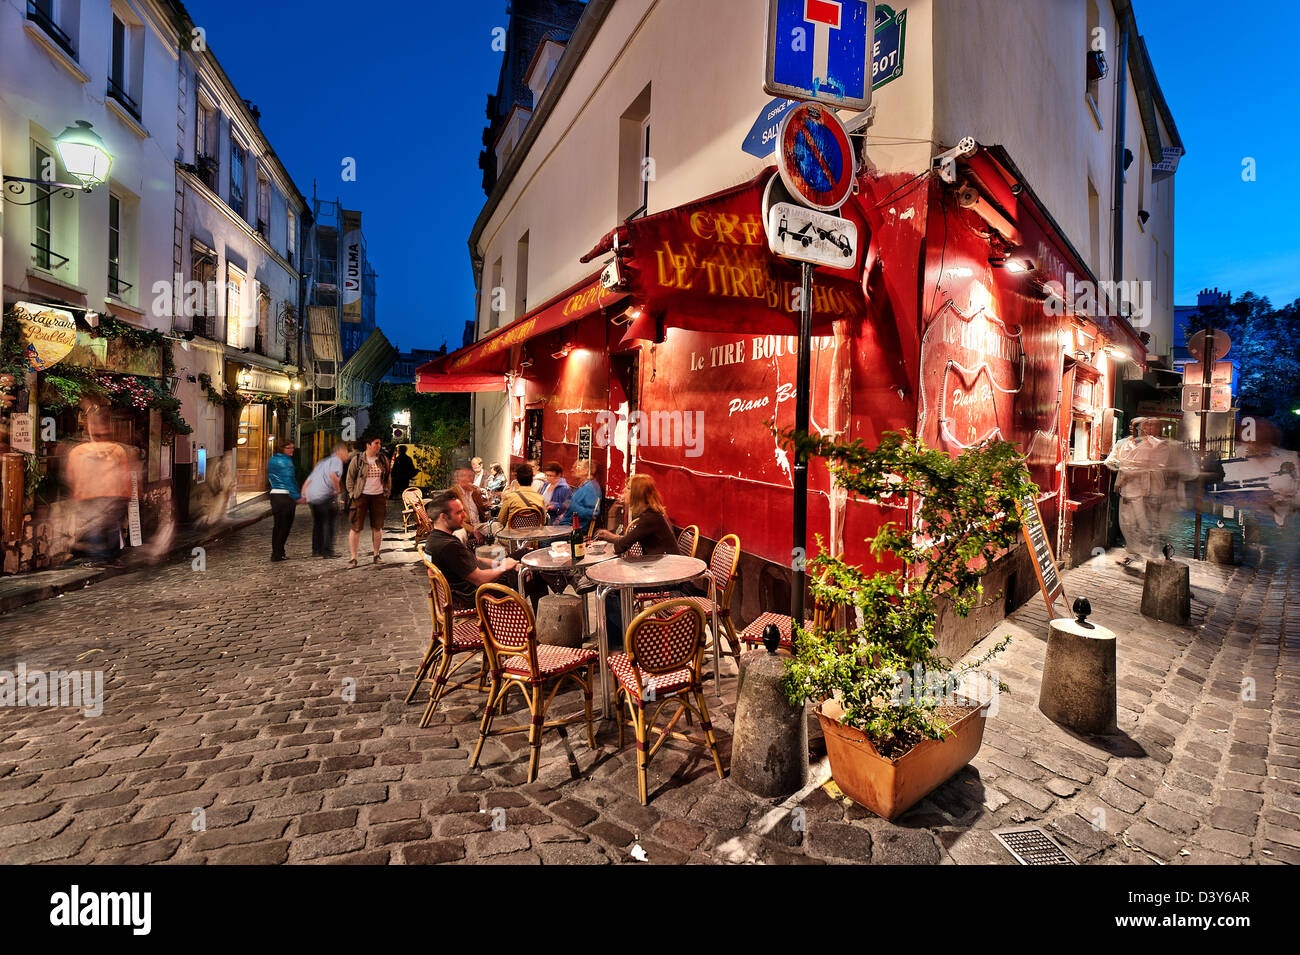 creperie “Le Tire Bouchon” at the corner of rue Norvins and rue Poulbot, Montmartre, Paris, France Stock Photo